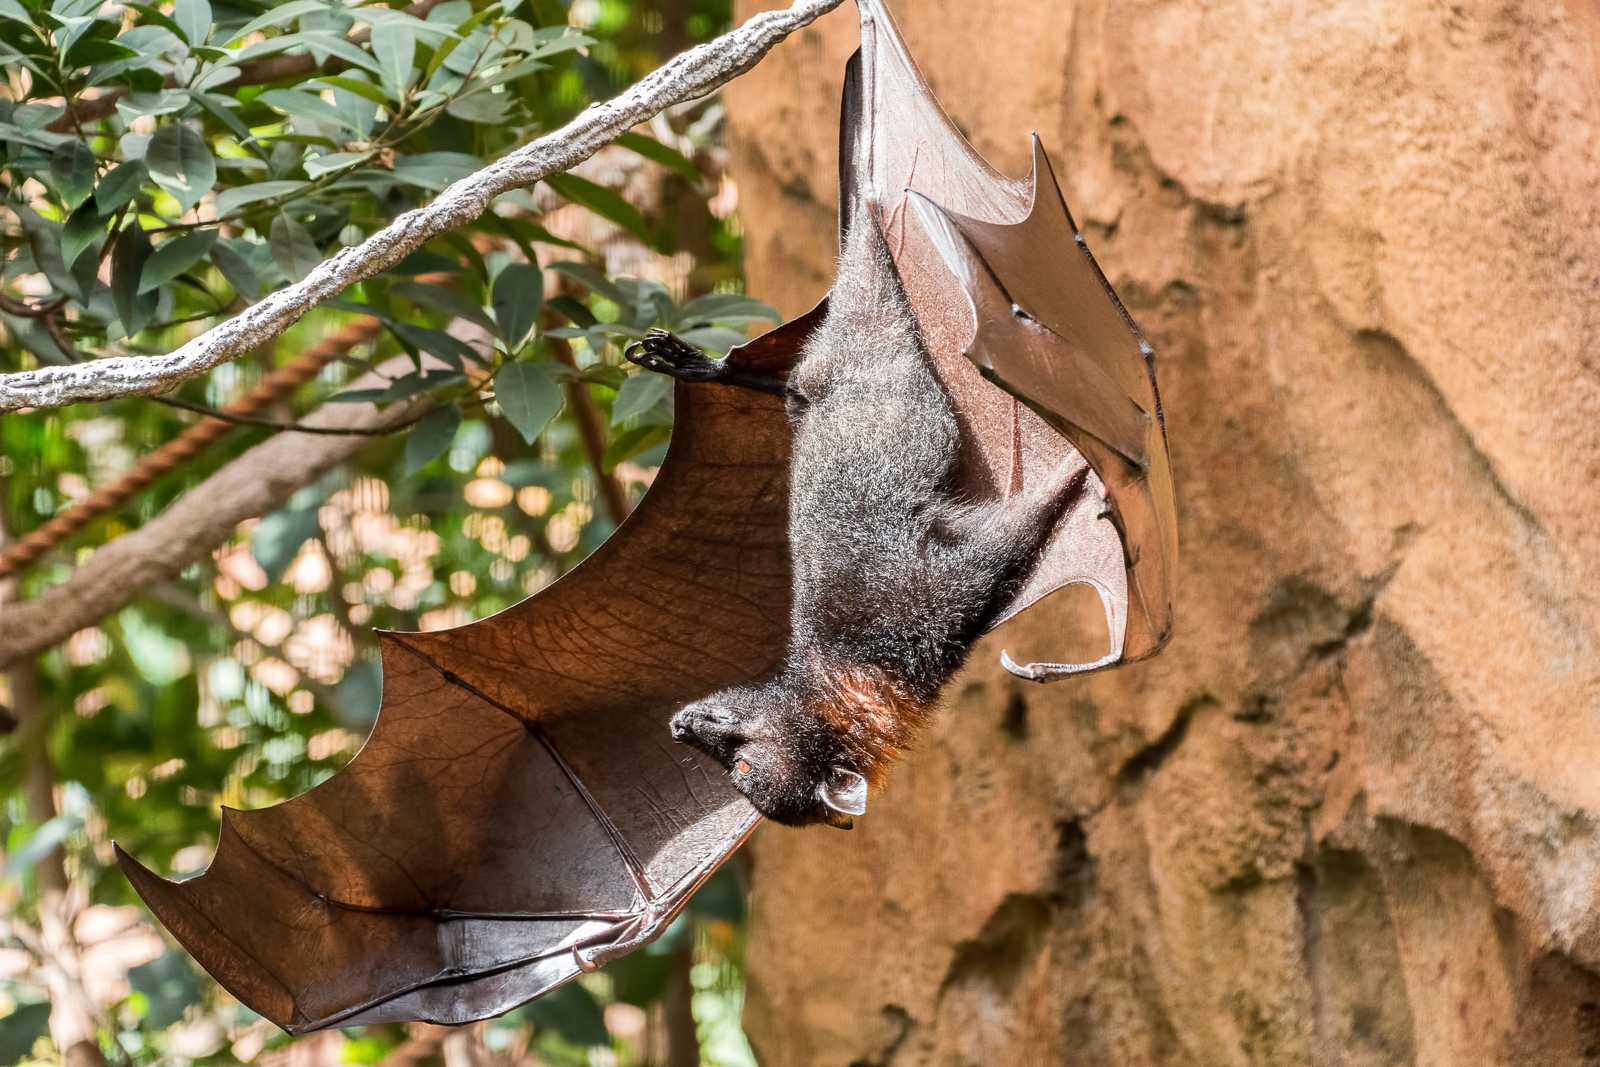 is it legal to have a pet bat?